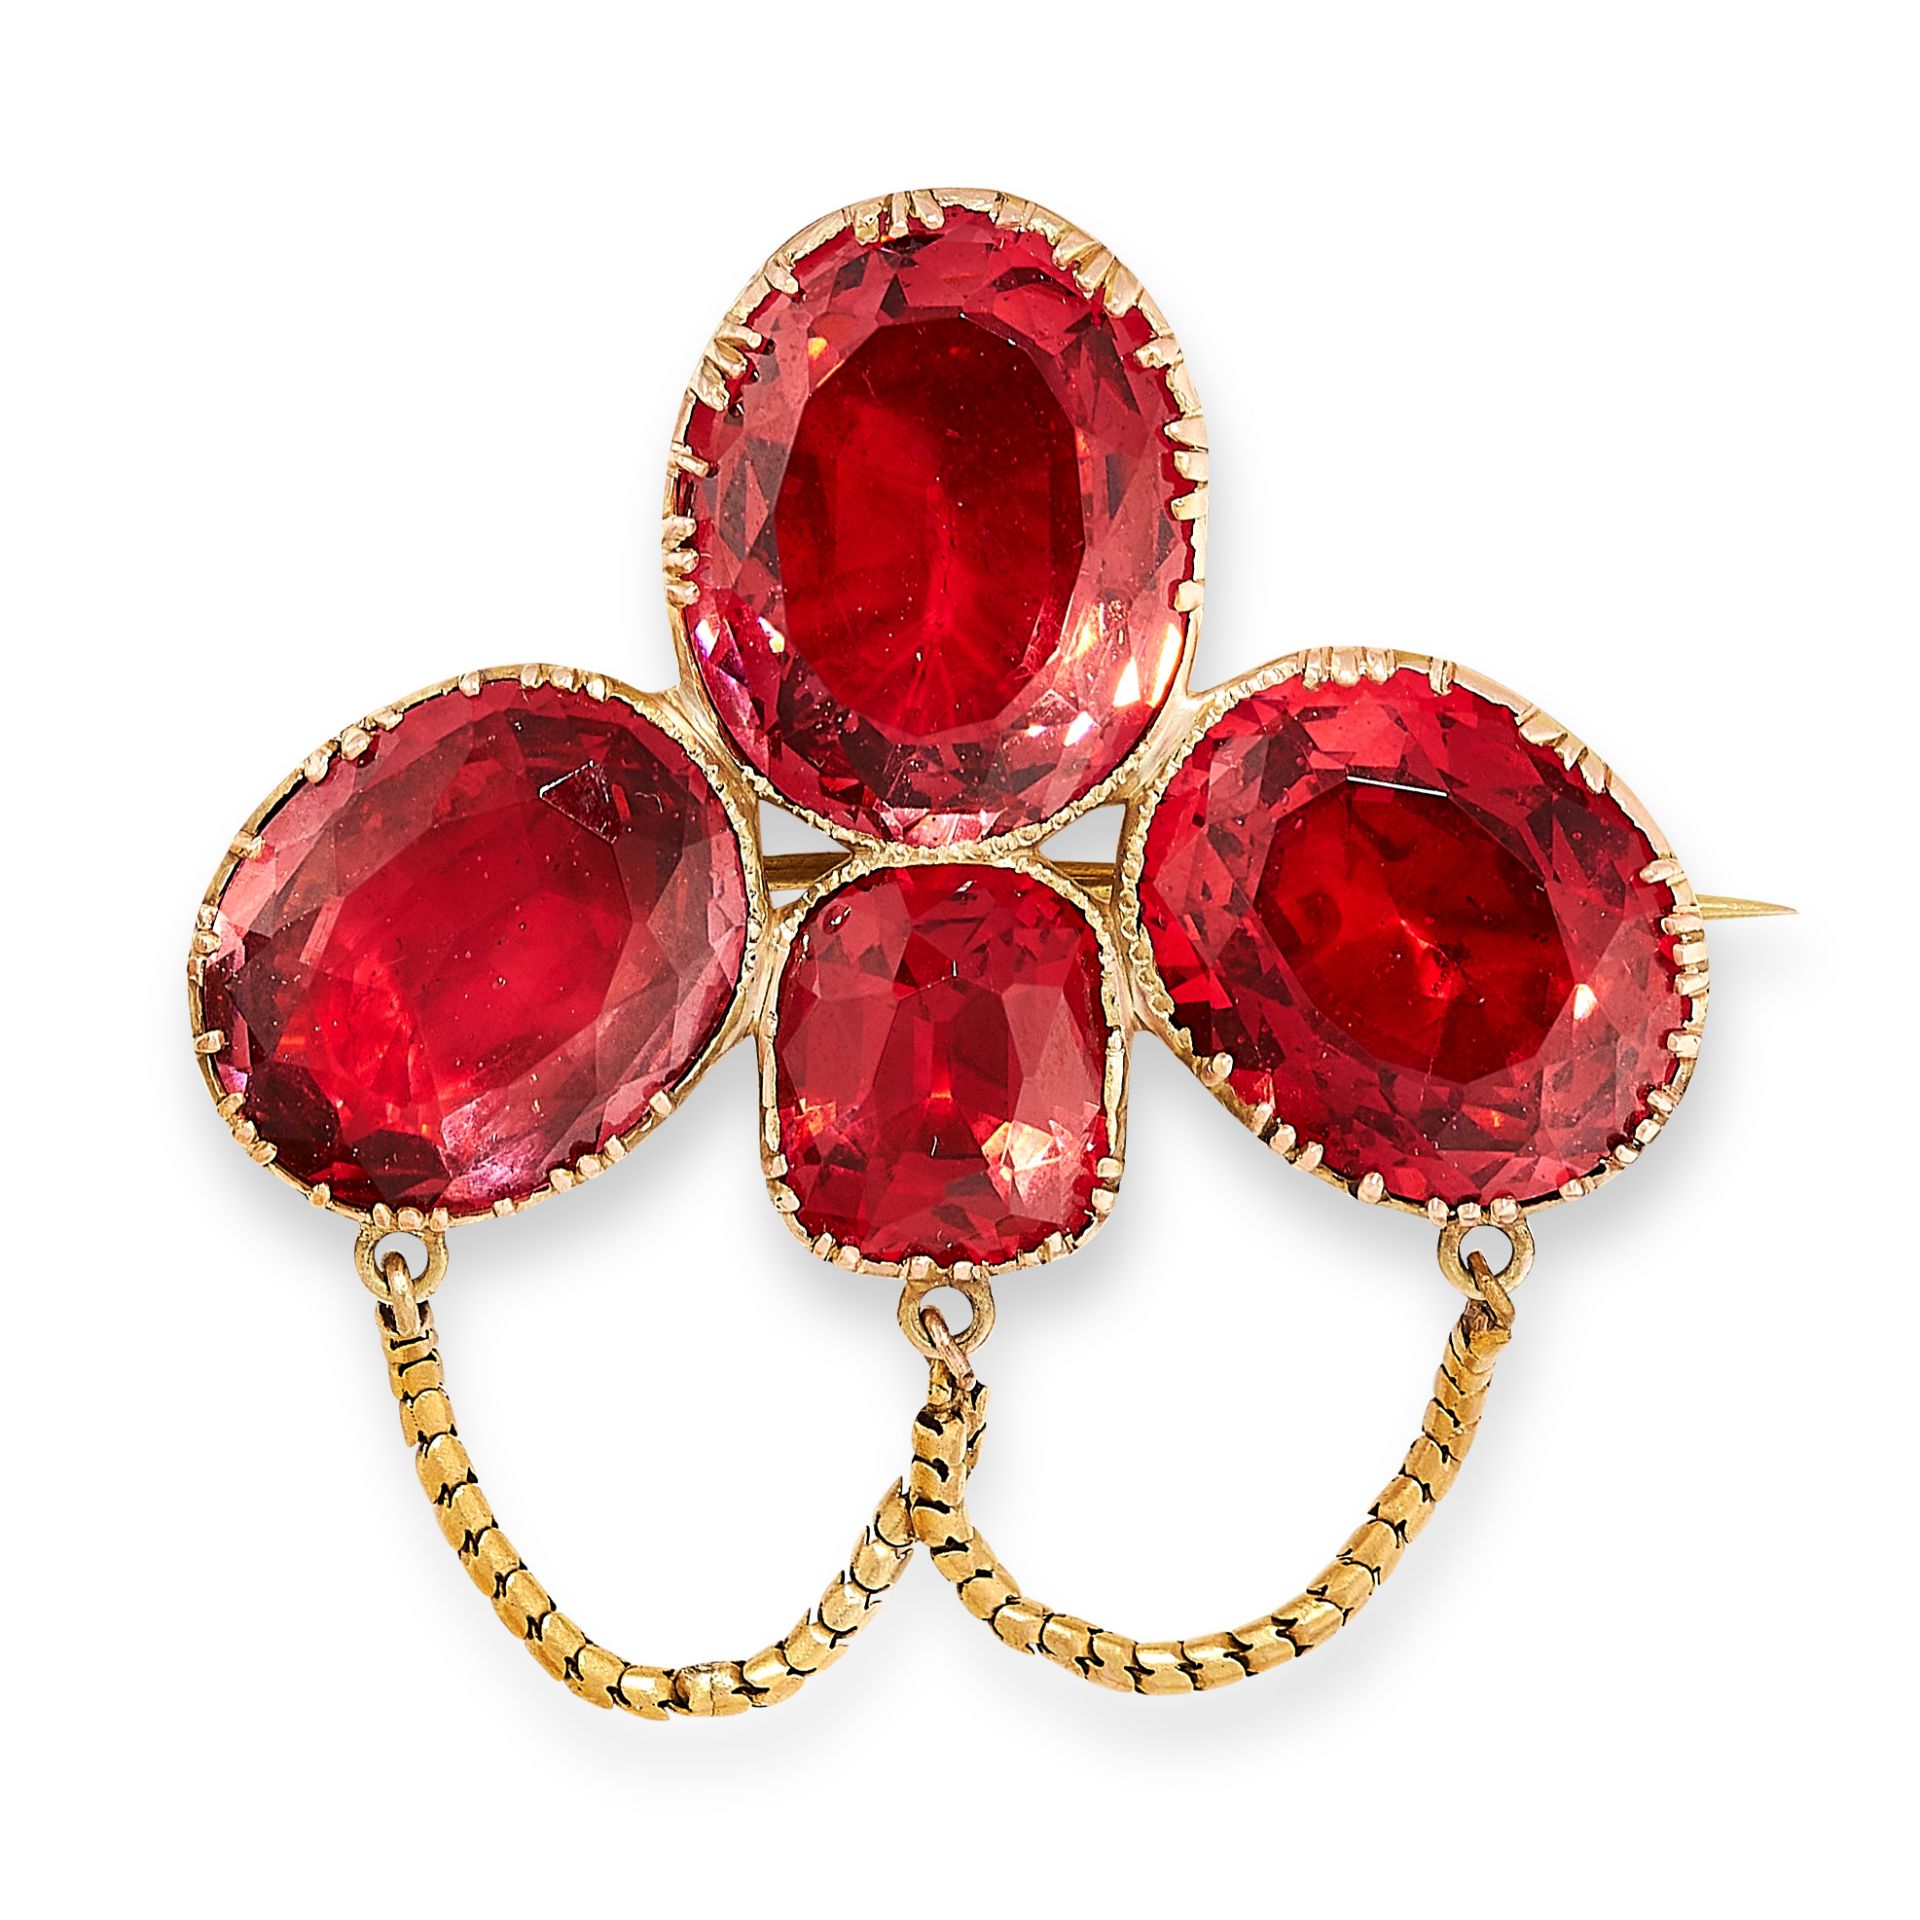 ANTIQUE PASTE BROOCH, 19TH CENTURY set with three graduated oval cut reddish pink paste gemstones,